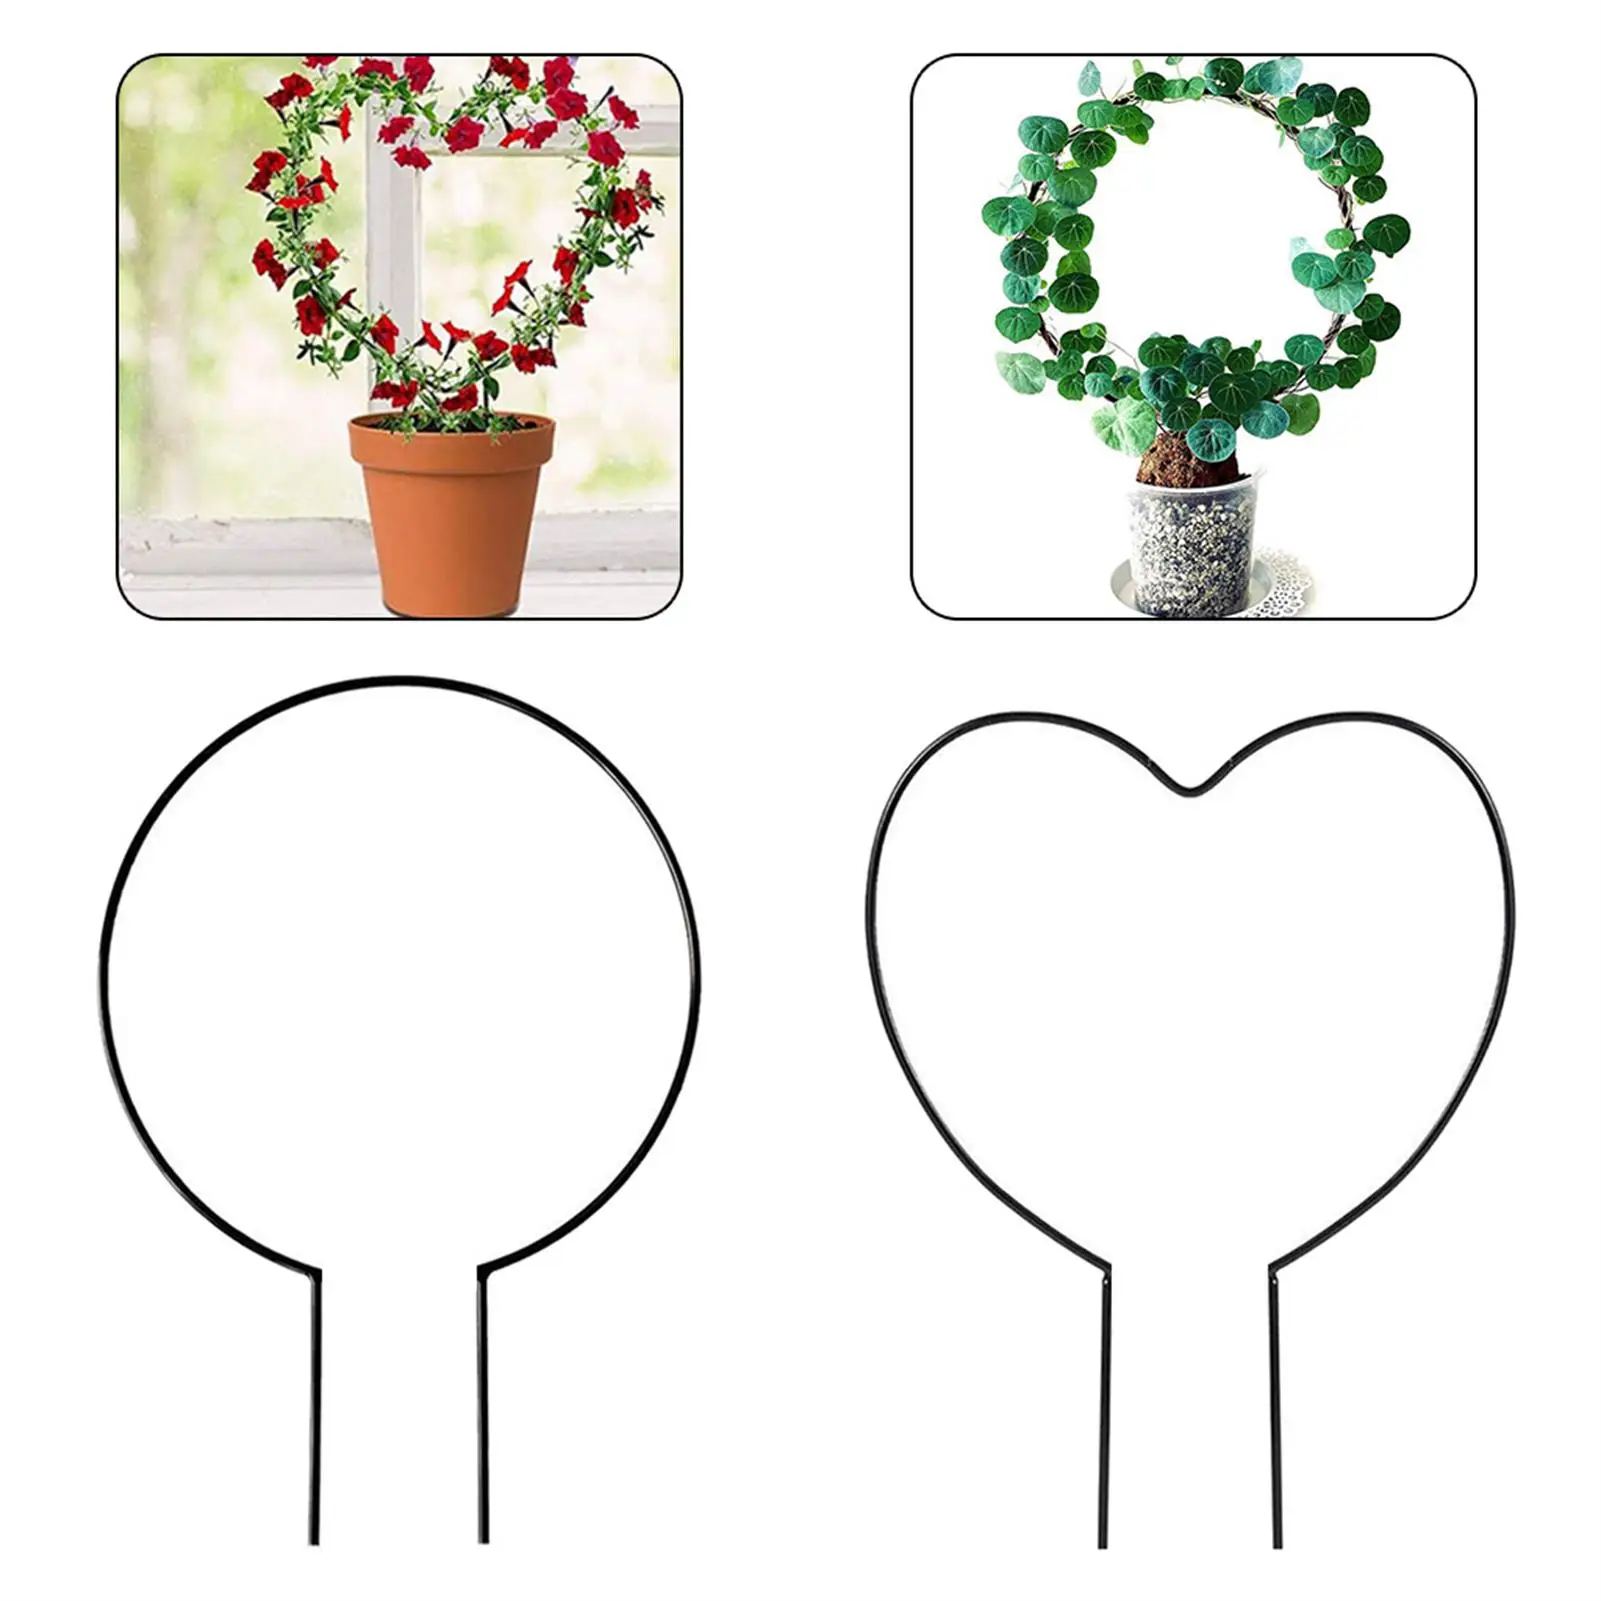 

Black Metal Garden Trellis For Climbing Plants Flower Vegetables Rose Rattan Heart And Round Shape Plant Holder Drop Shipping